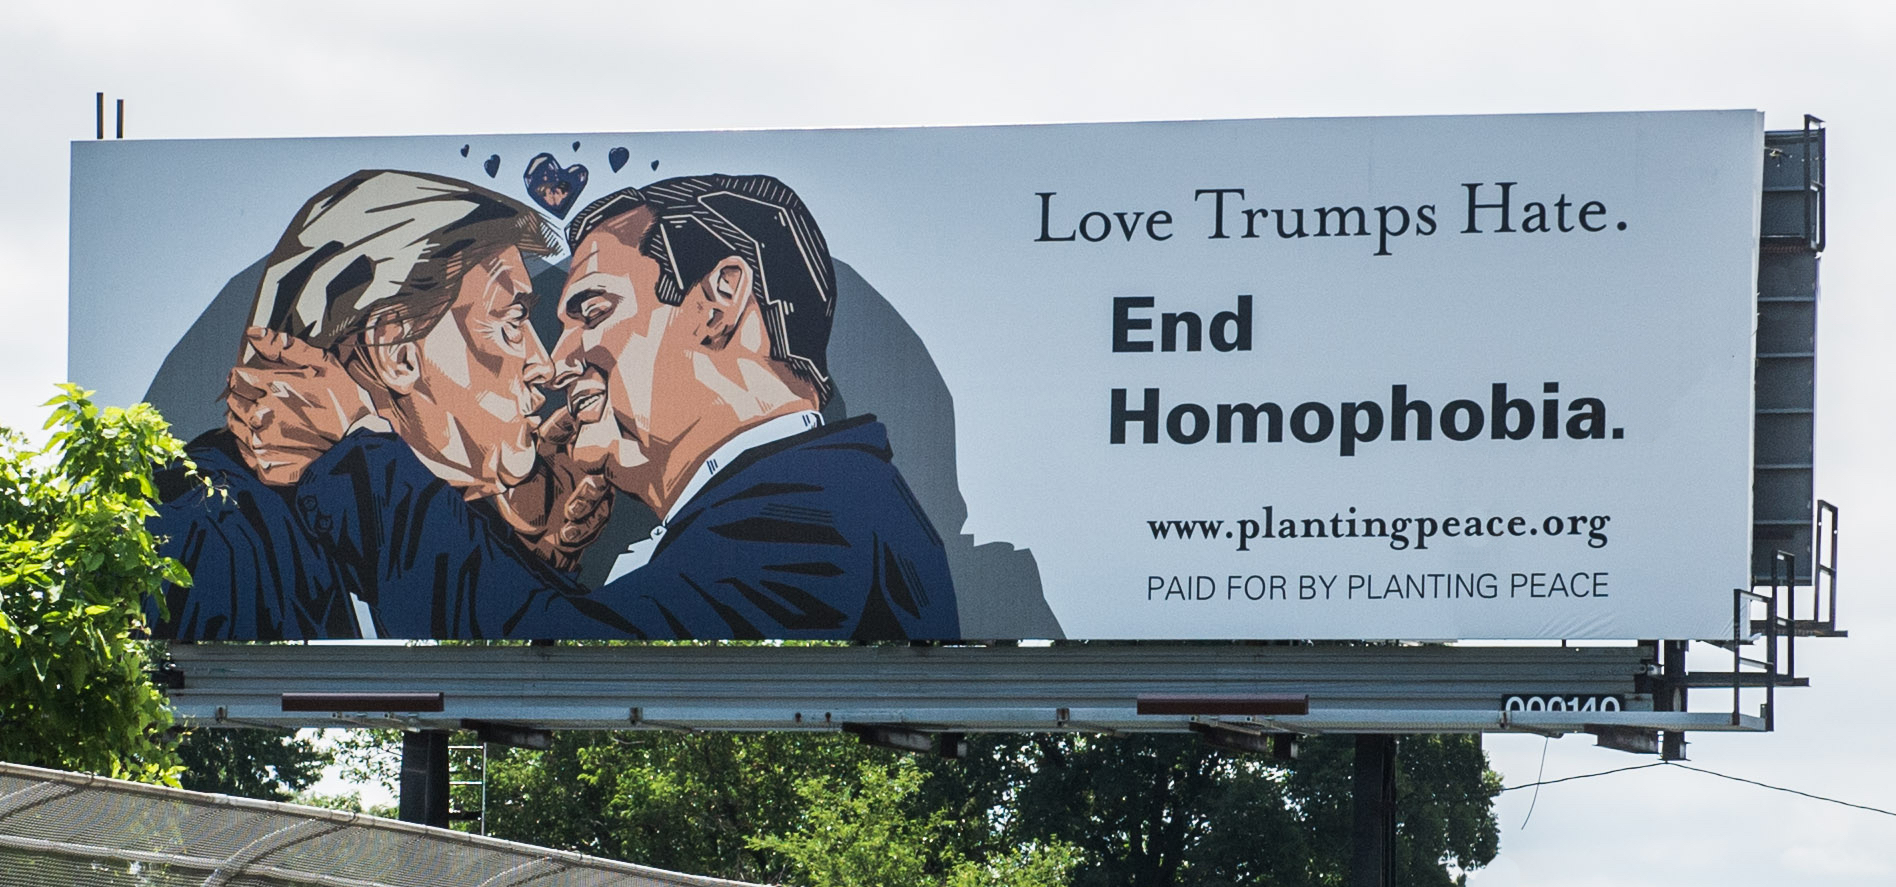 Billboard shows Donald Trump and Ted Cruz kissing.